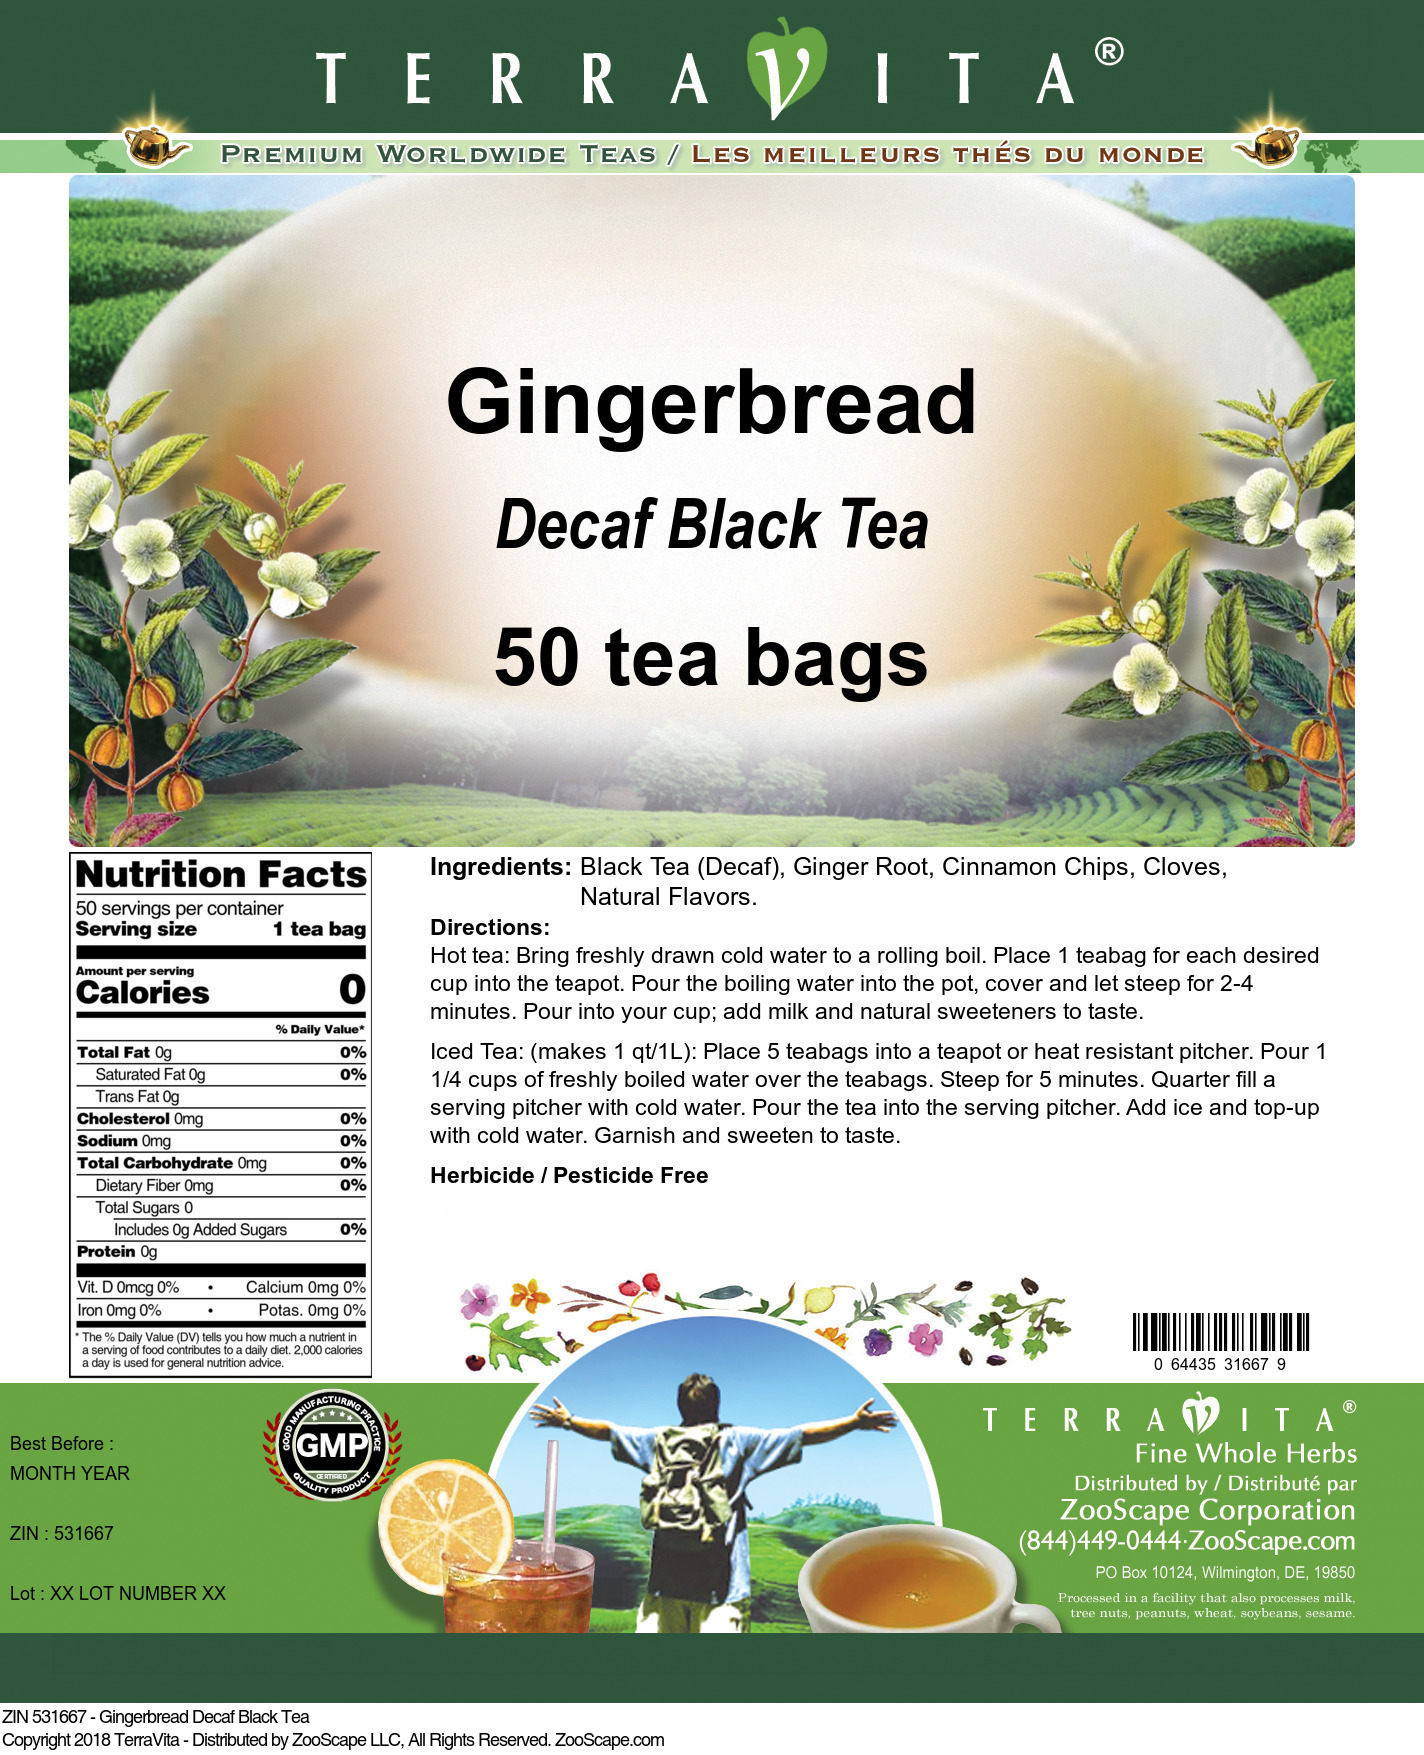 Gingerbread Decaf Black Tea - Label